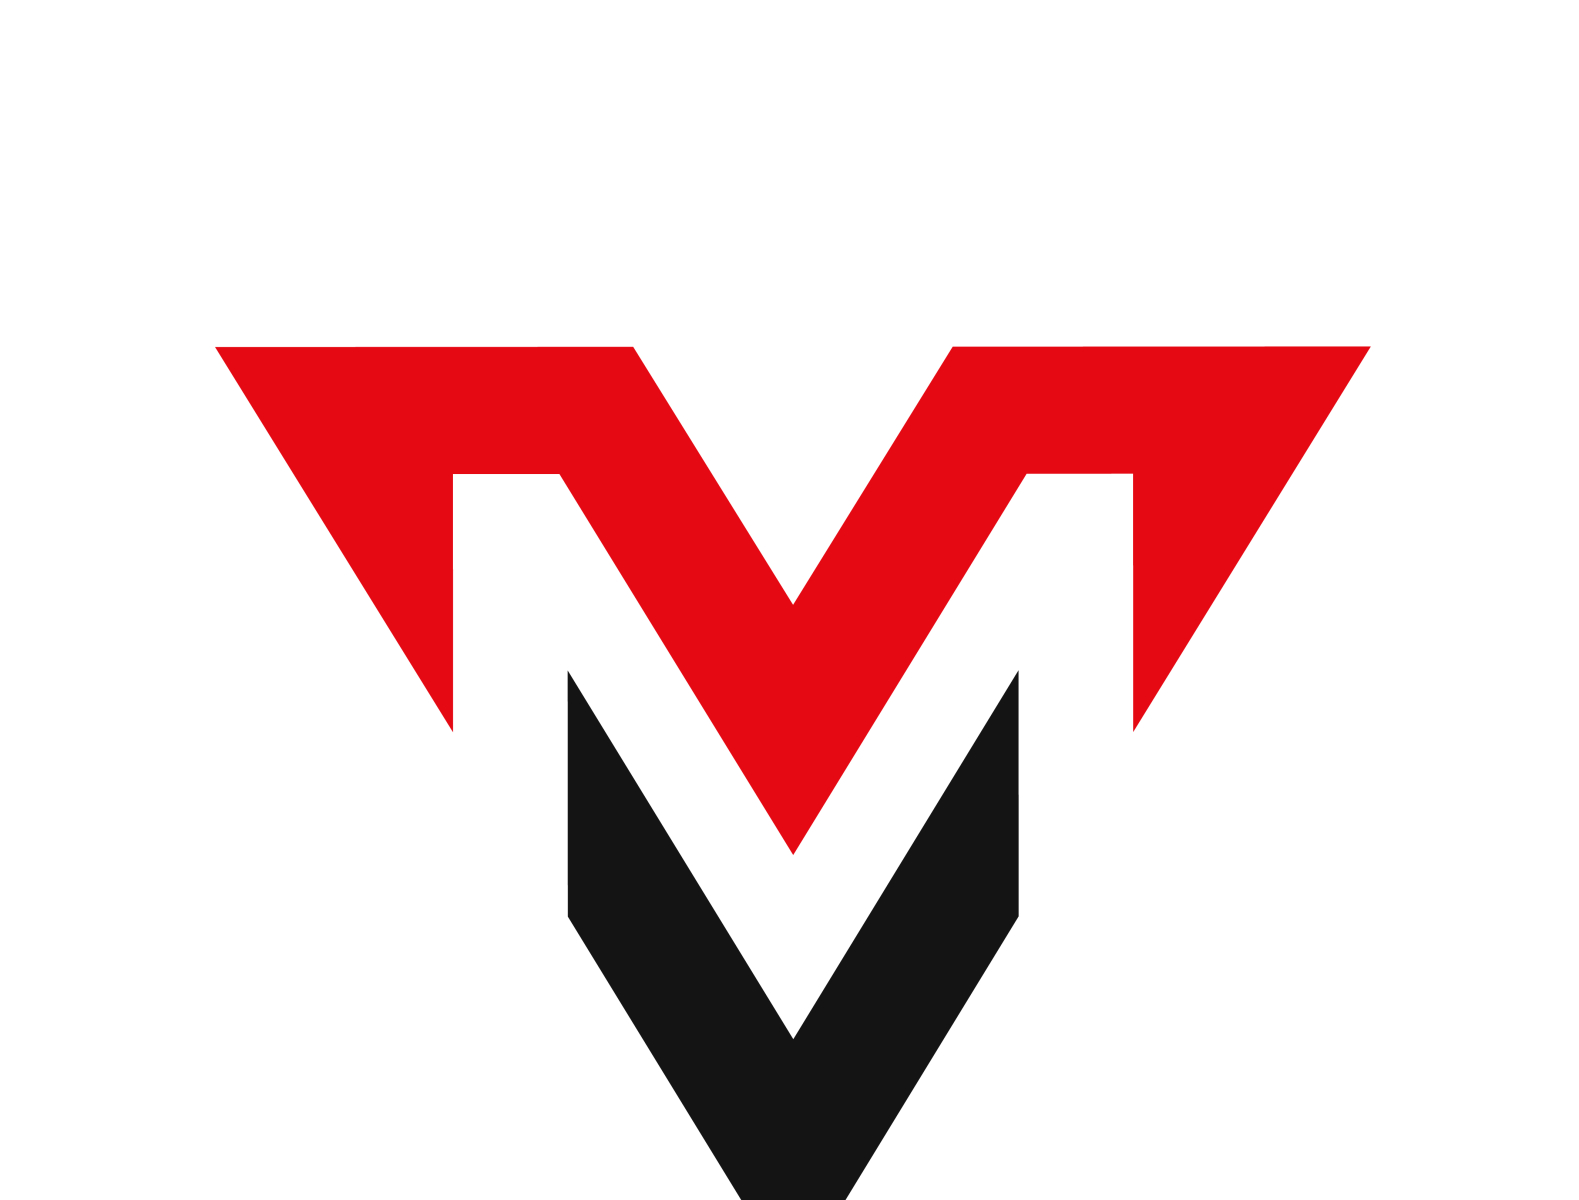 Vm logo monogram emblem style with crown shape Vector Image